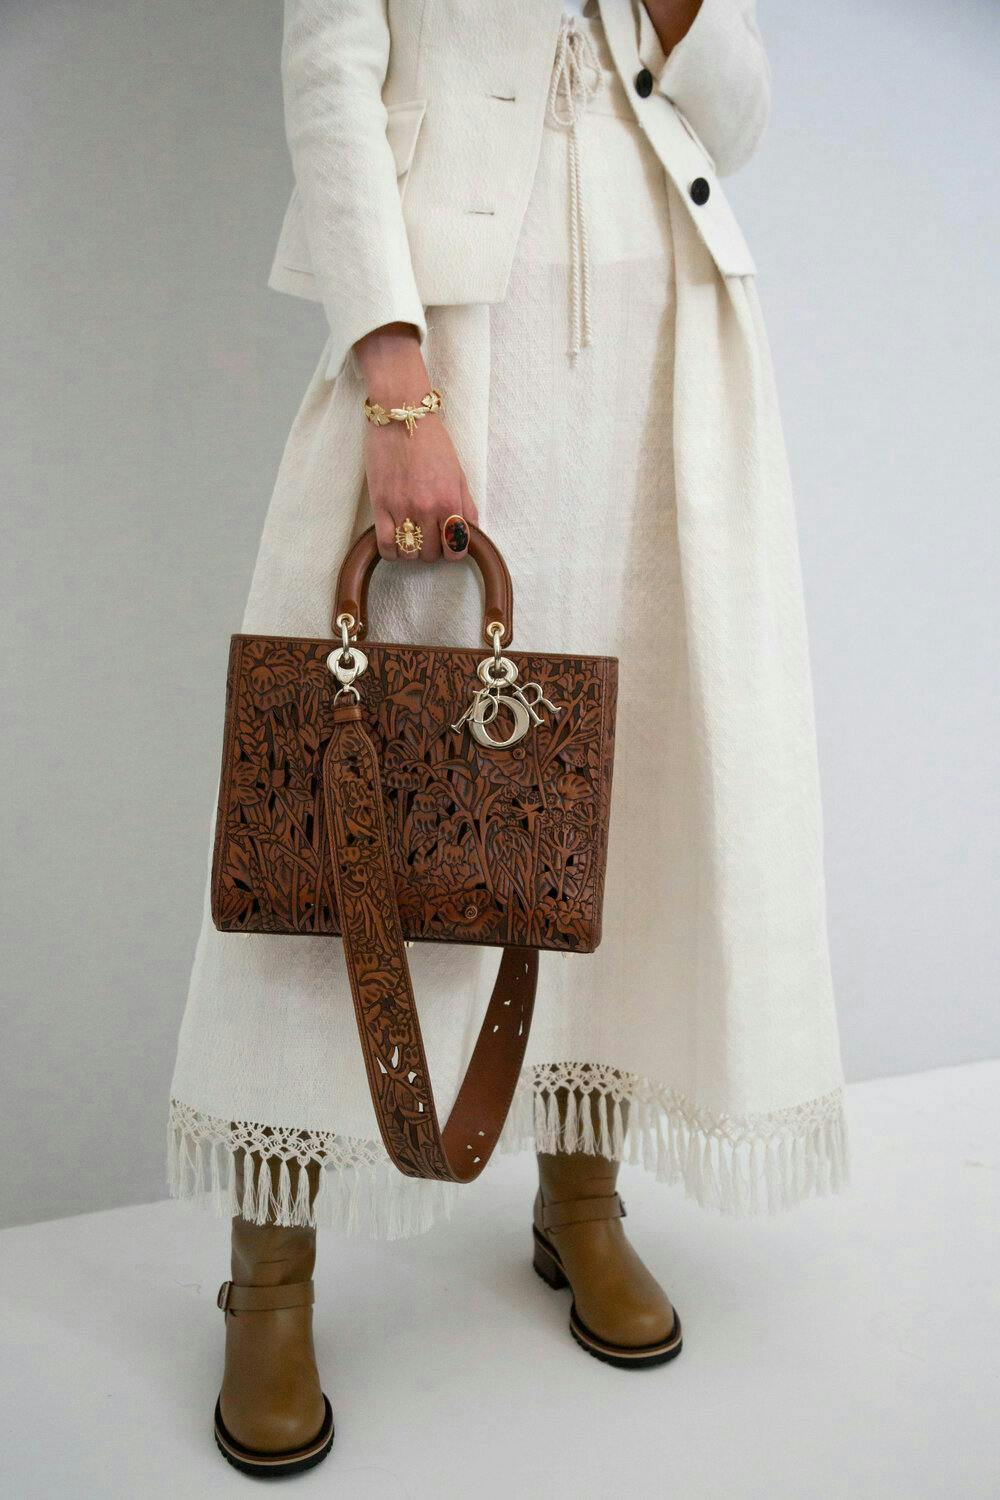 home decor handbag bag accessories accessory linen clothing apparel